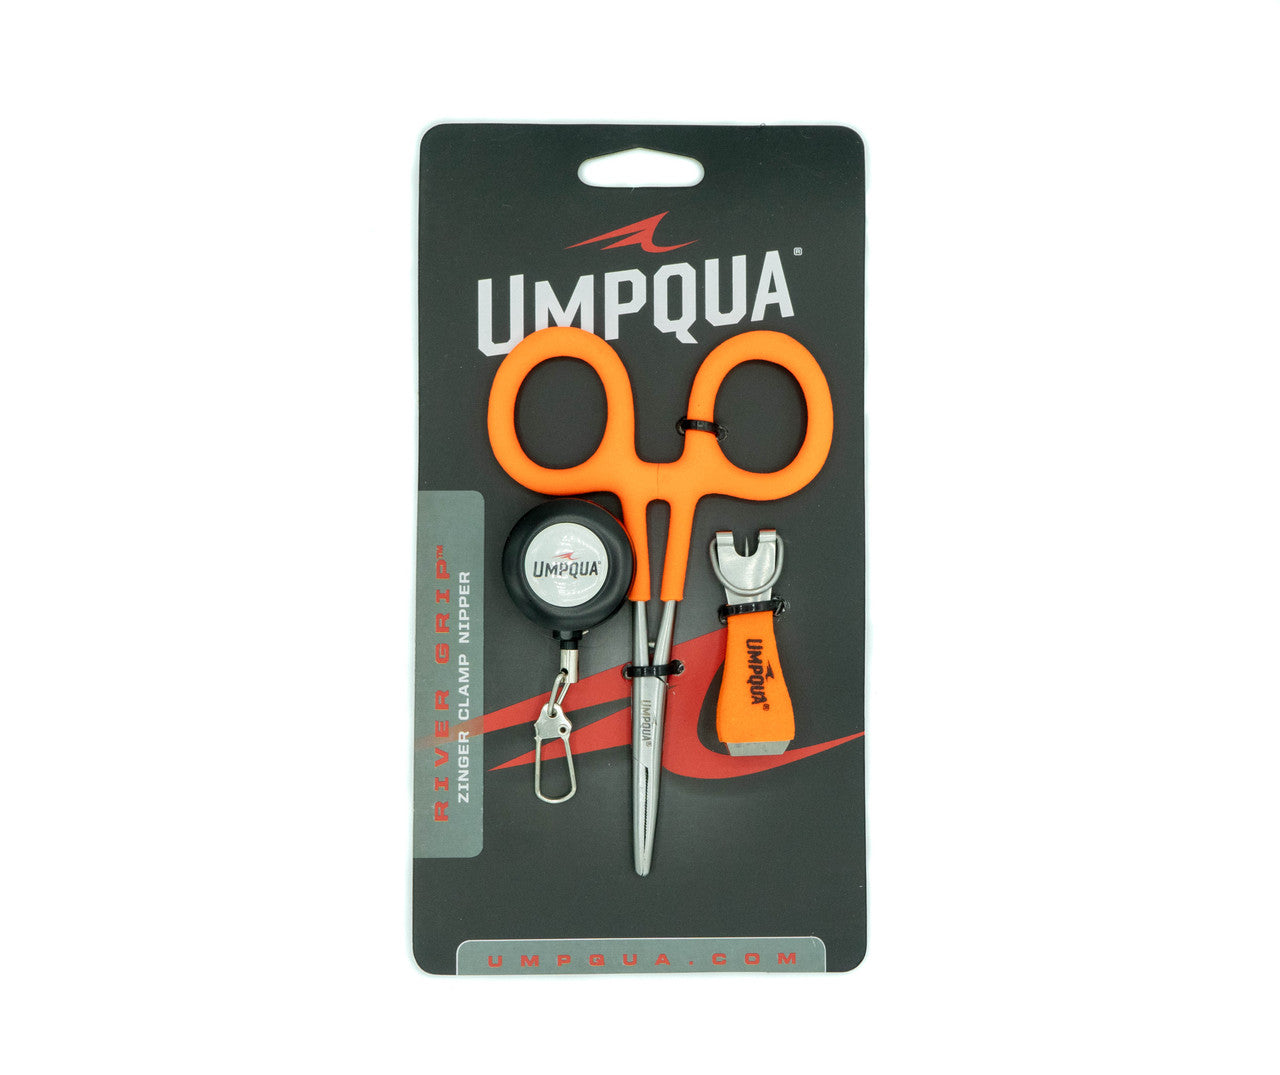 Umpqua River Grip, Zinger/Clamp/Nipper Kit